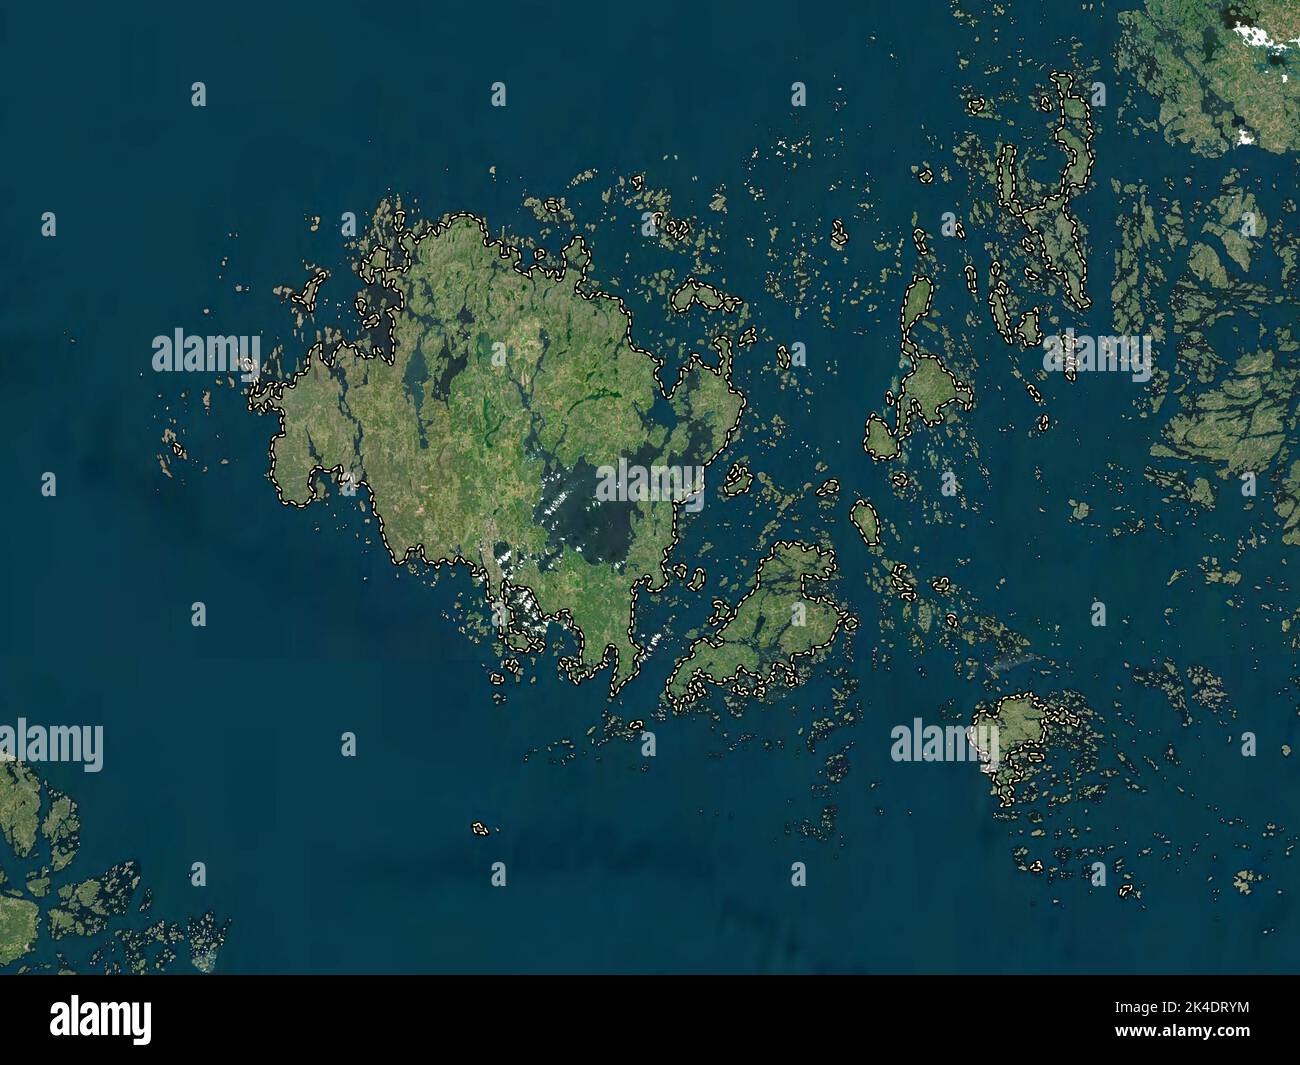 Aland, region of Finland. Low resolution satellite map Stock Photo